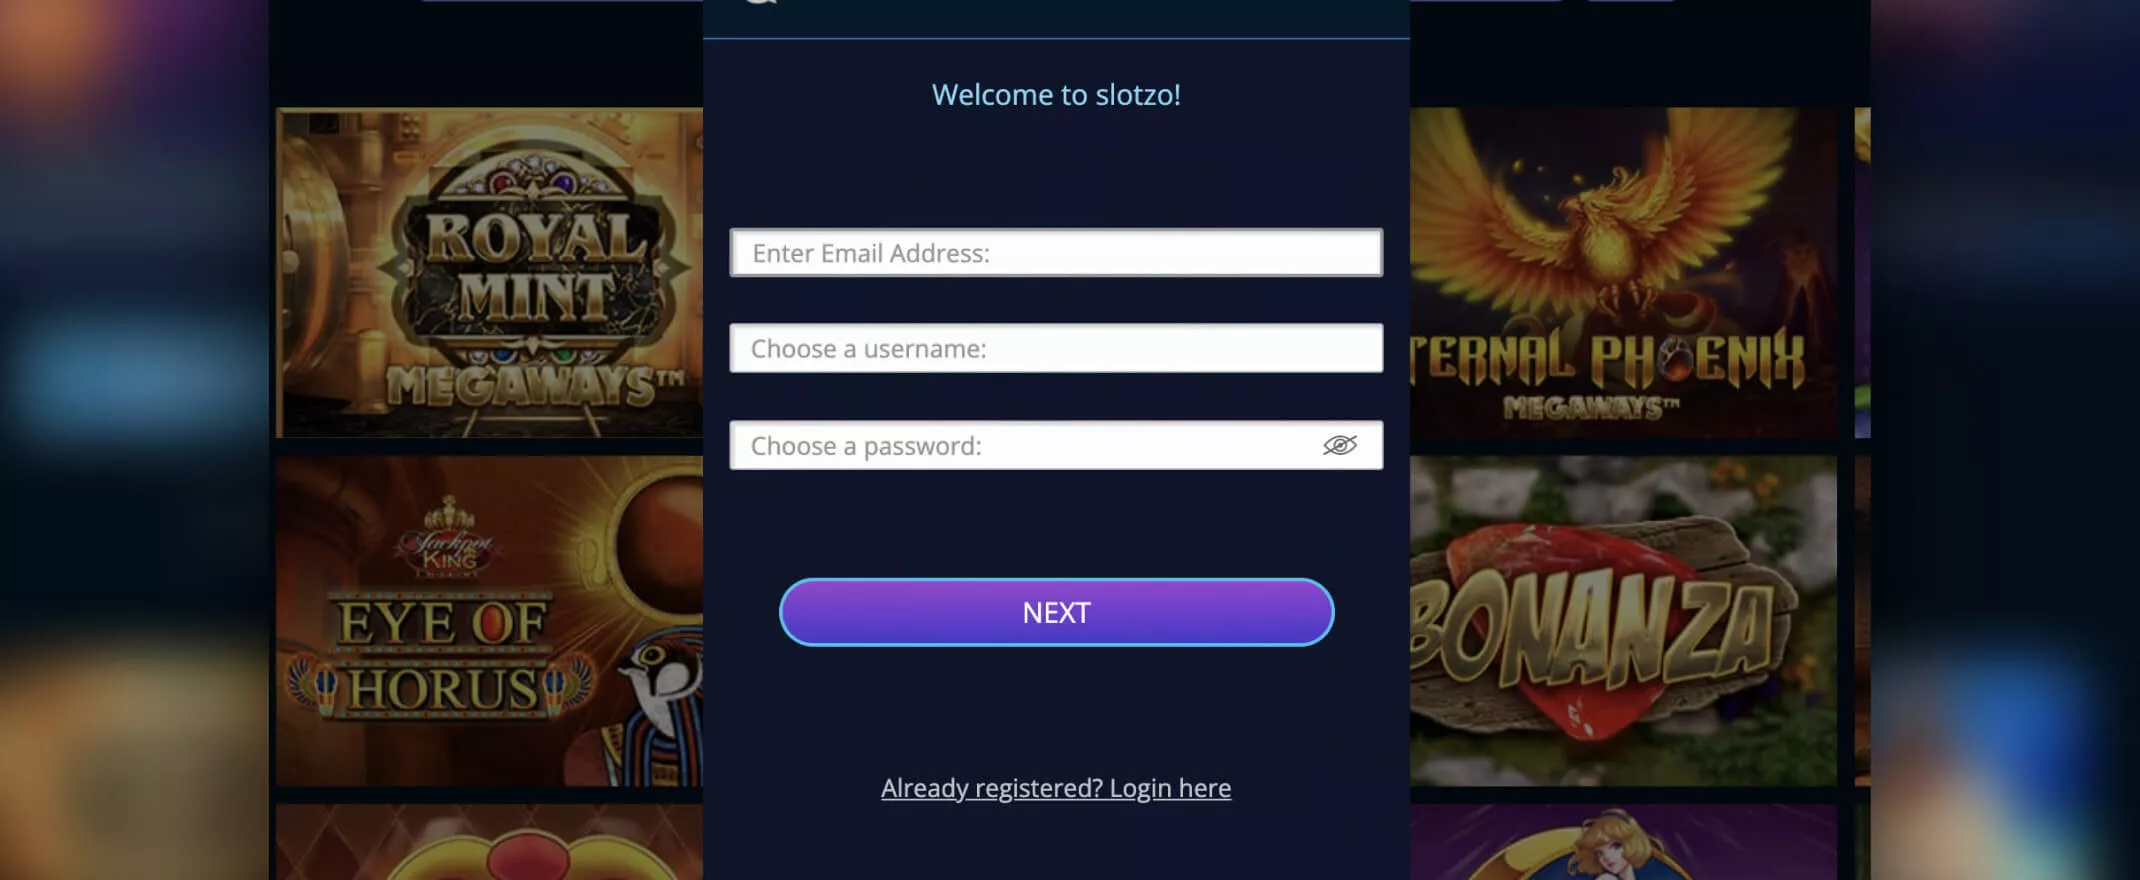 SLotzo casino screenshot of registration